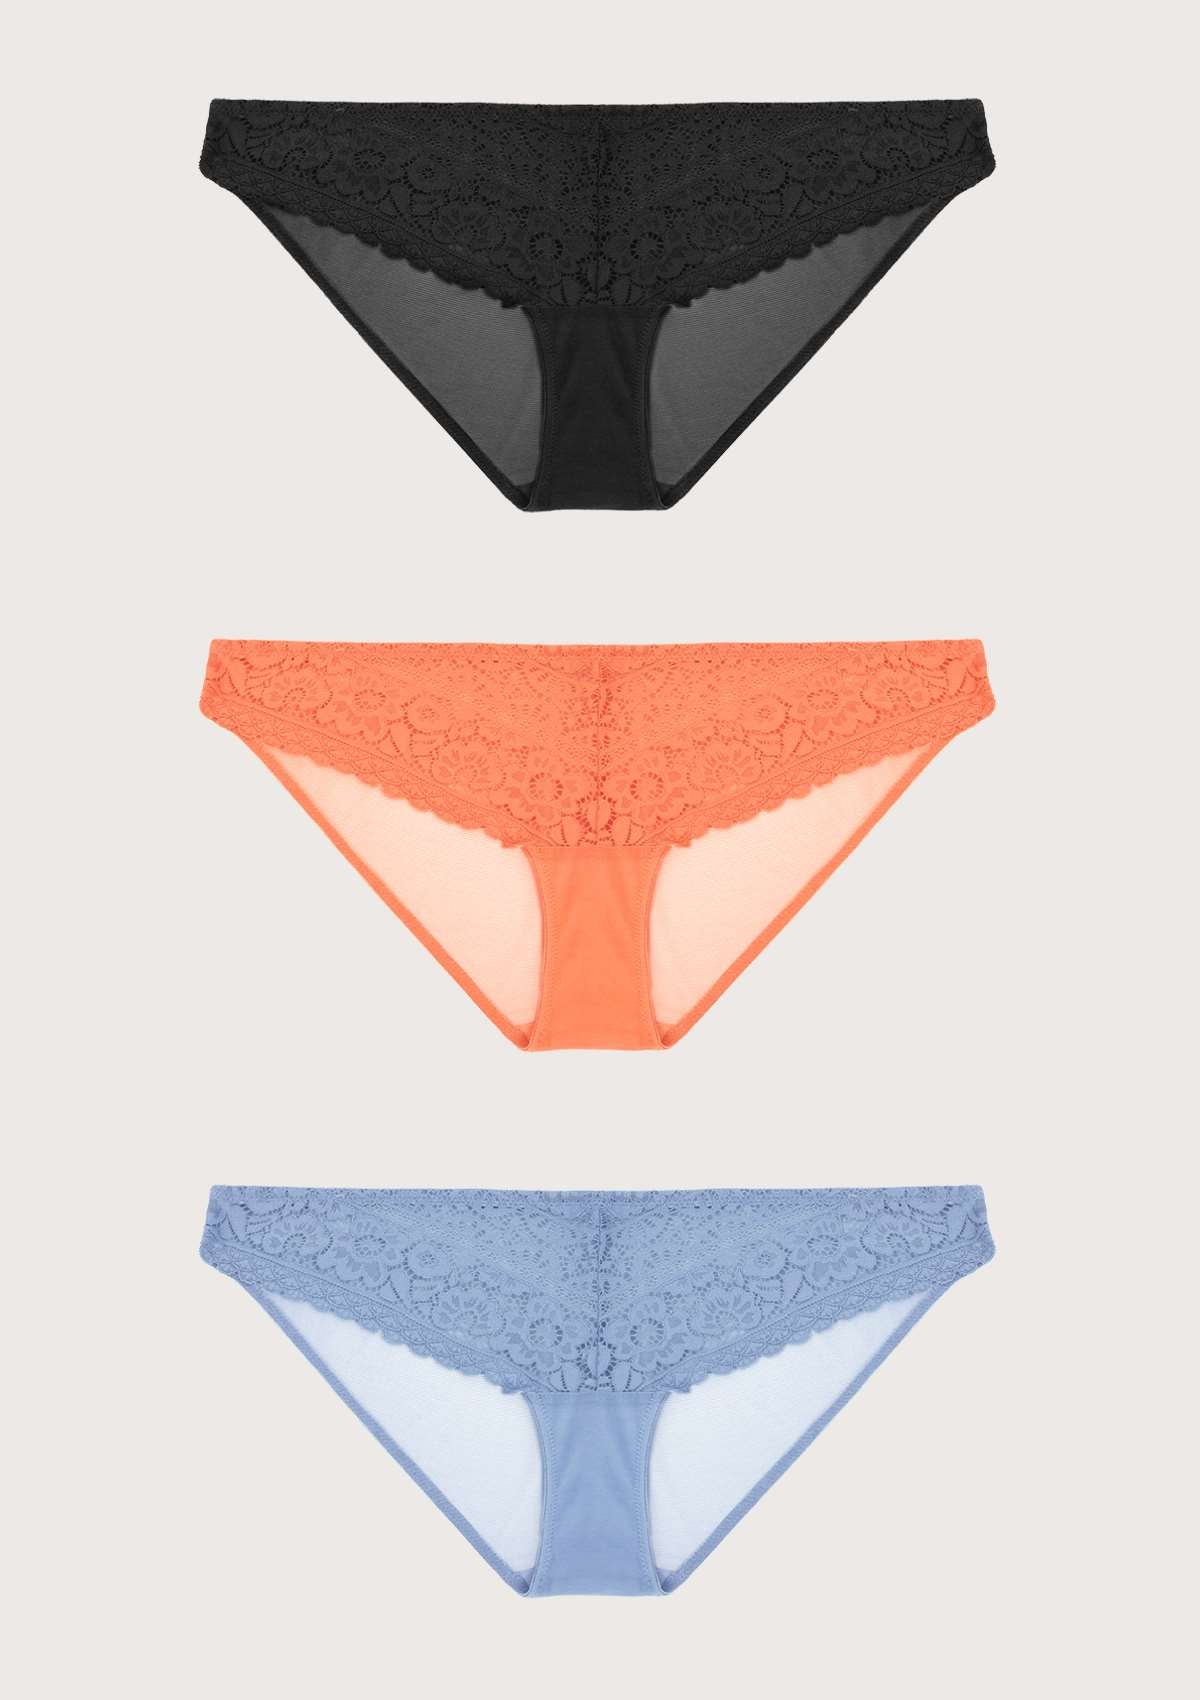 HSIA Leaf Flower Lace Bikini Panties 3 Pack - XXL / Black+Orange+Blue